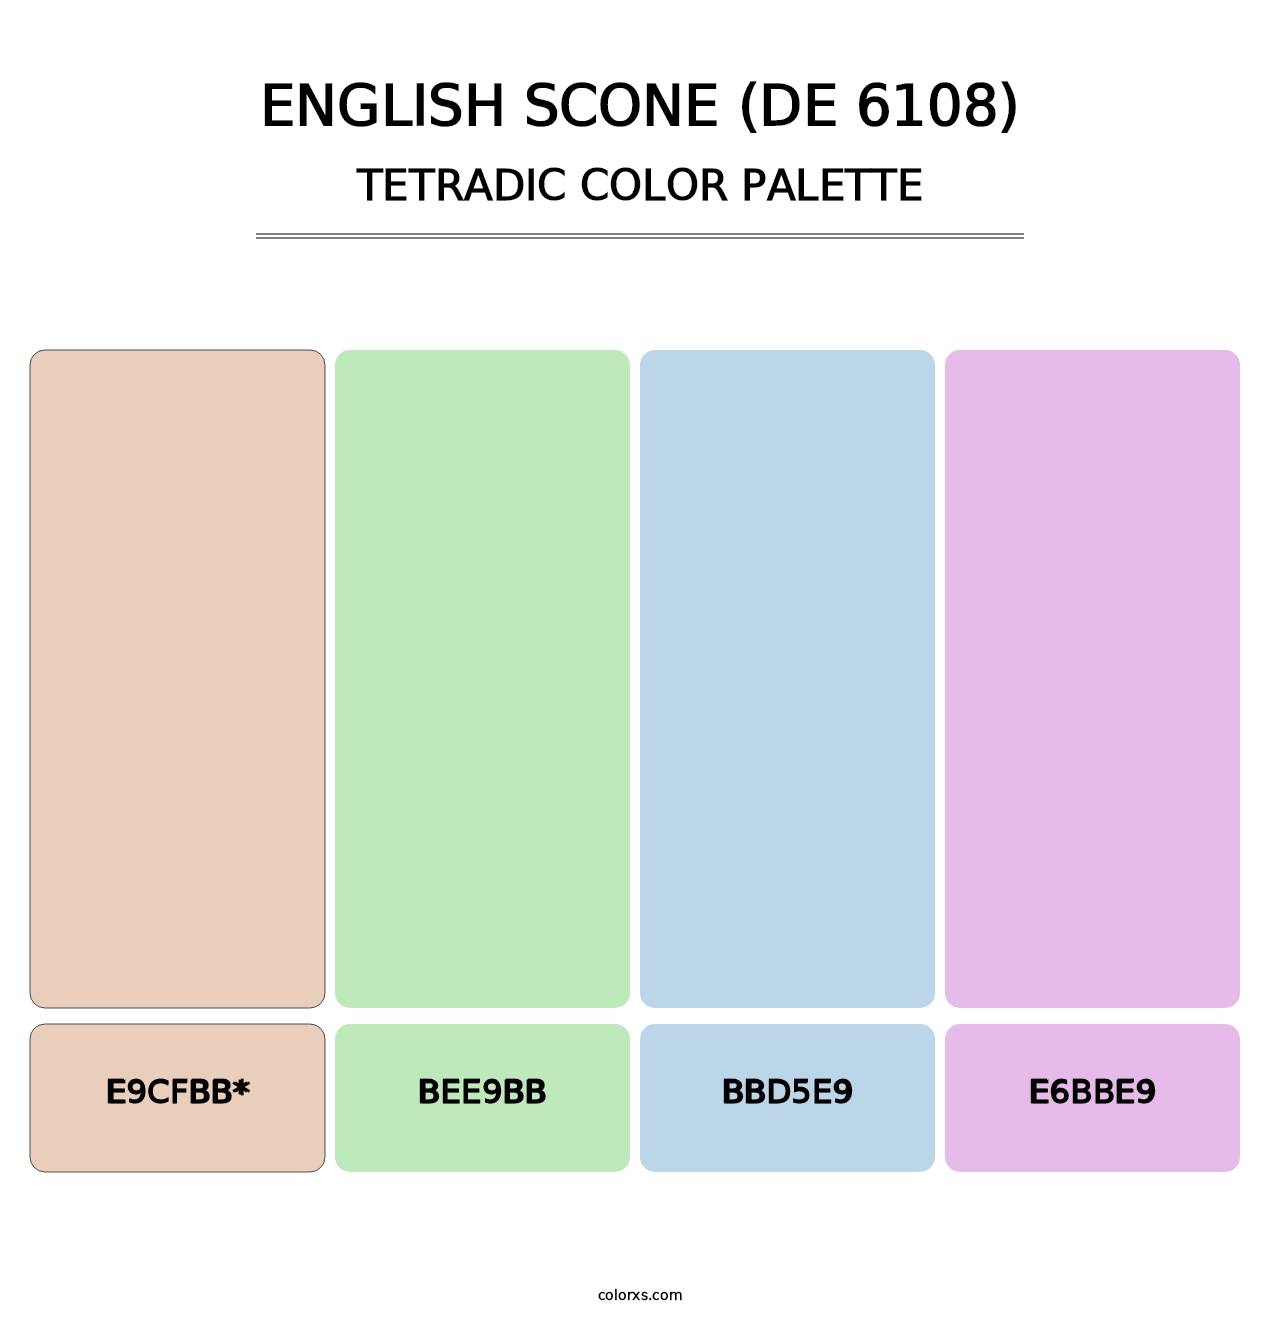 English Scone (DE 6108) - Tetradic Color Palette